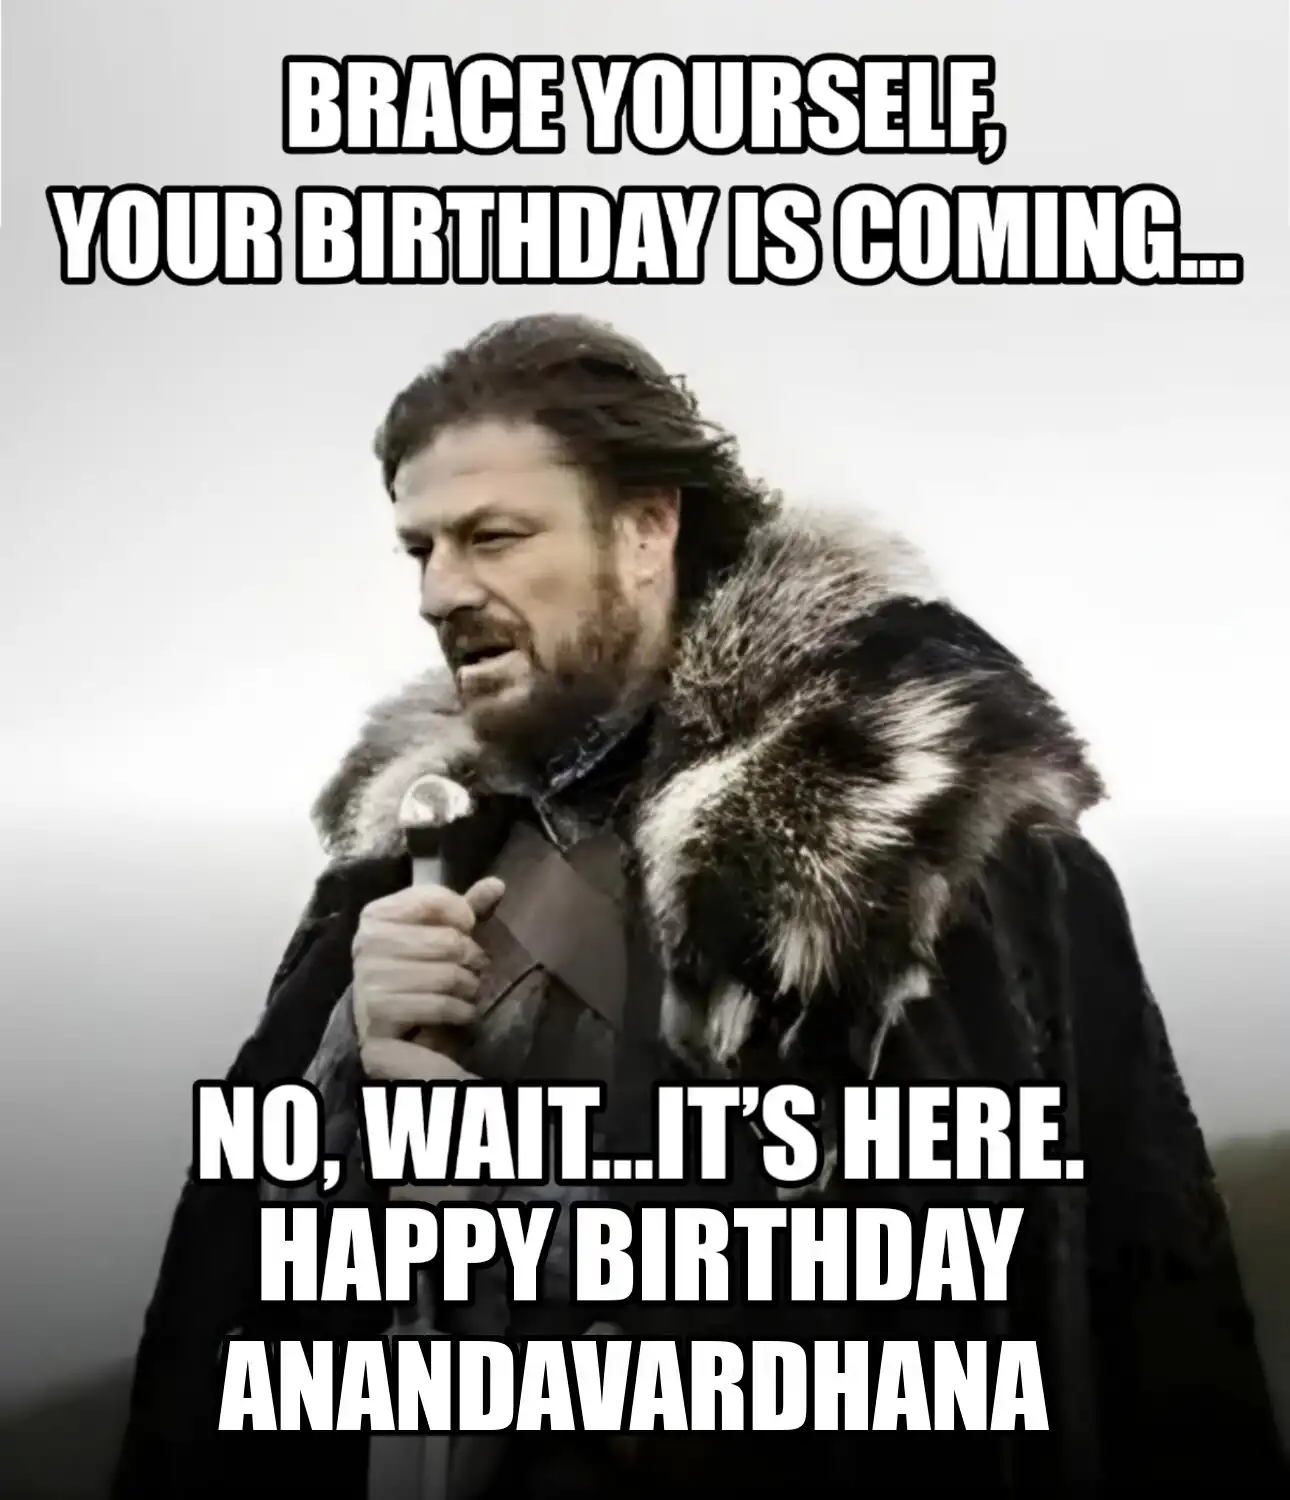 Happy Birthday Anandavardhana Brace Yourself Your Birthday Is Coming Meme